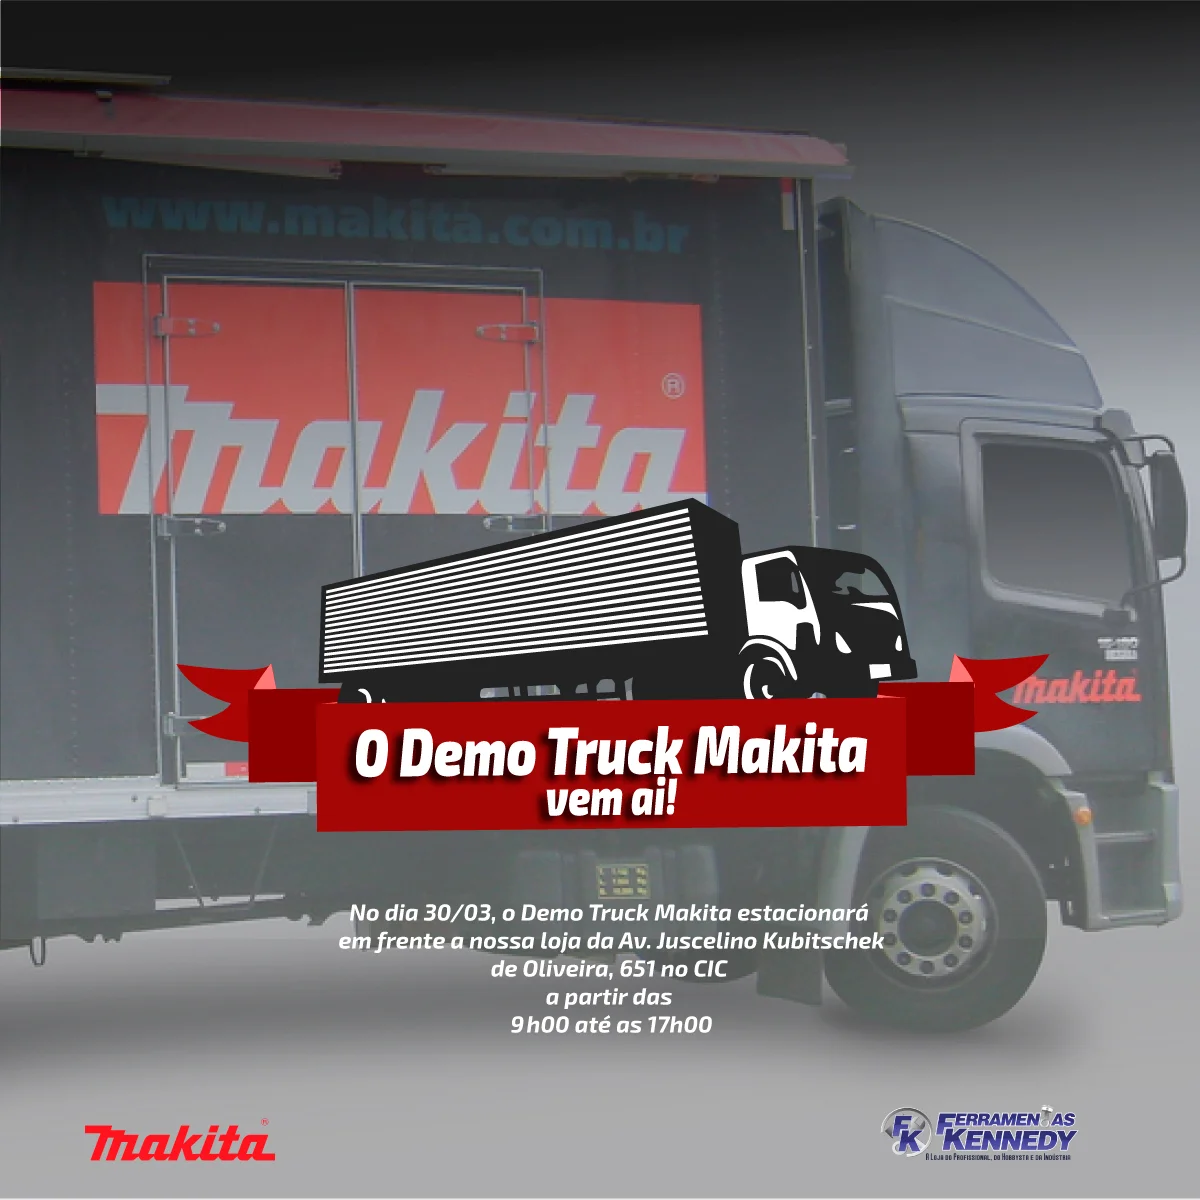 O Demo Truck Makita vem aí!